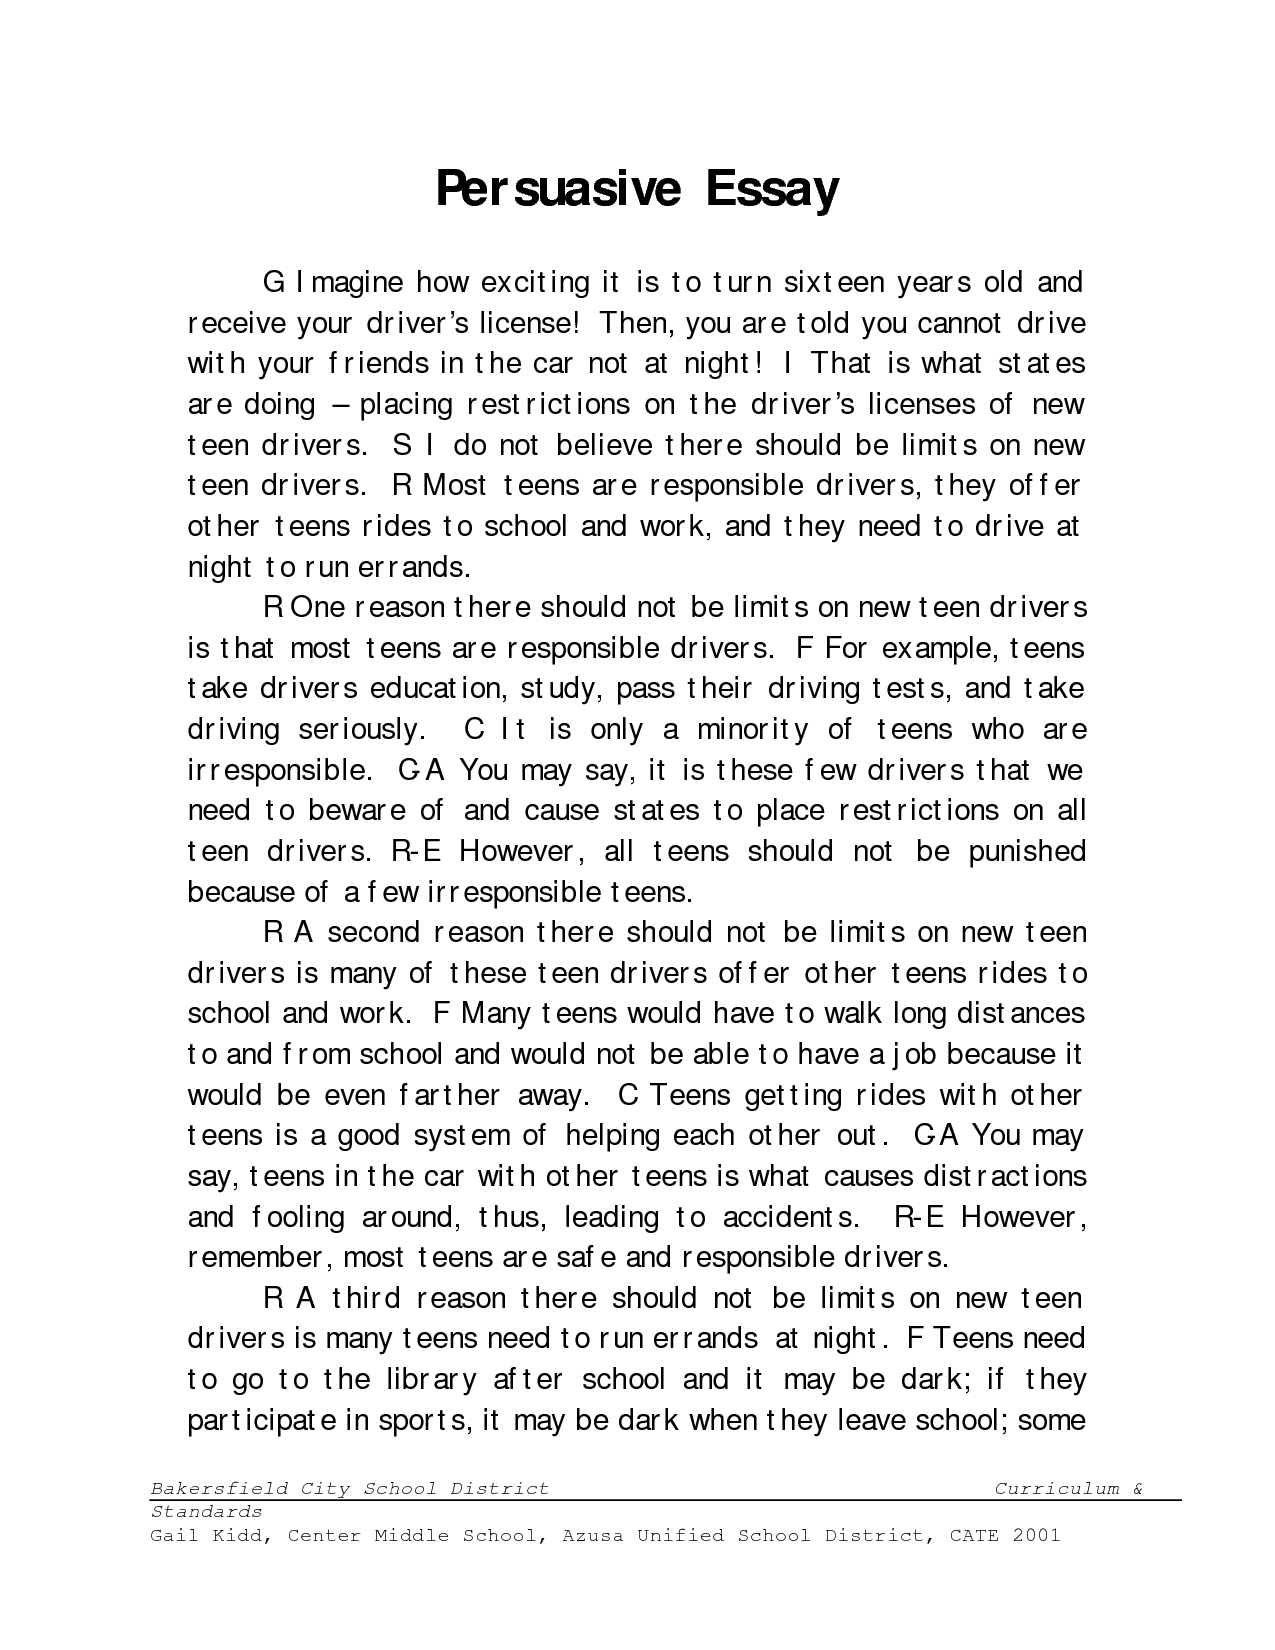 Persuasive essay example middle school